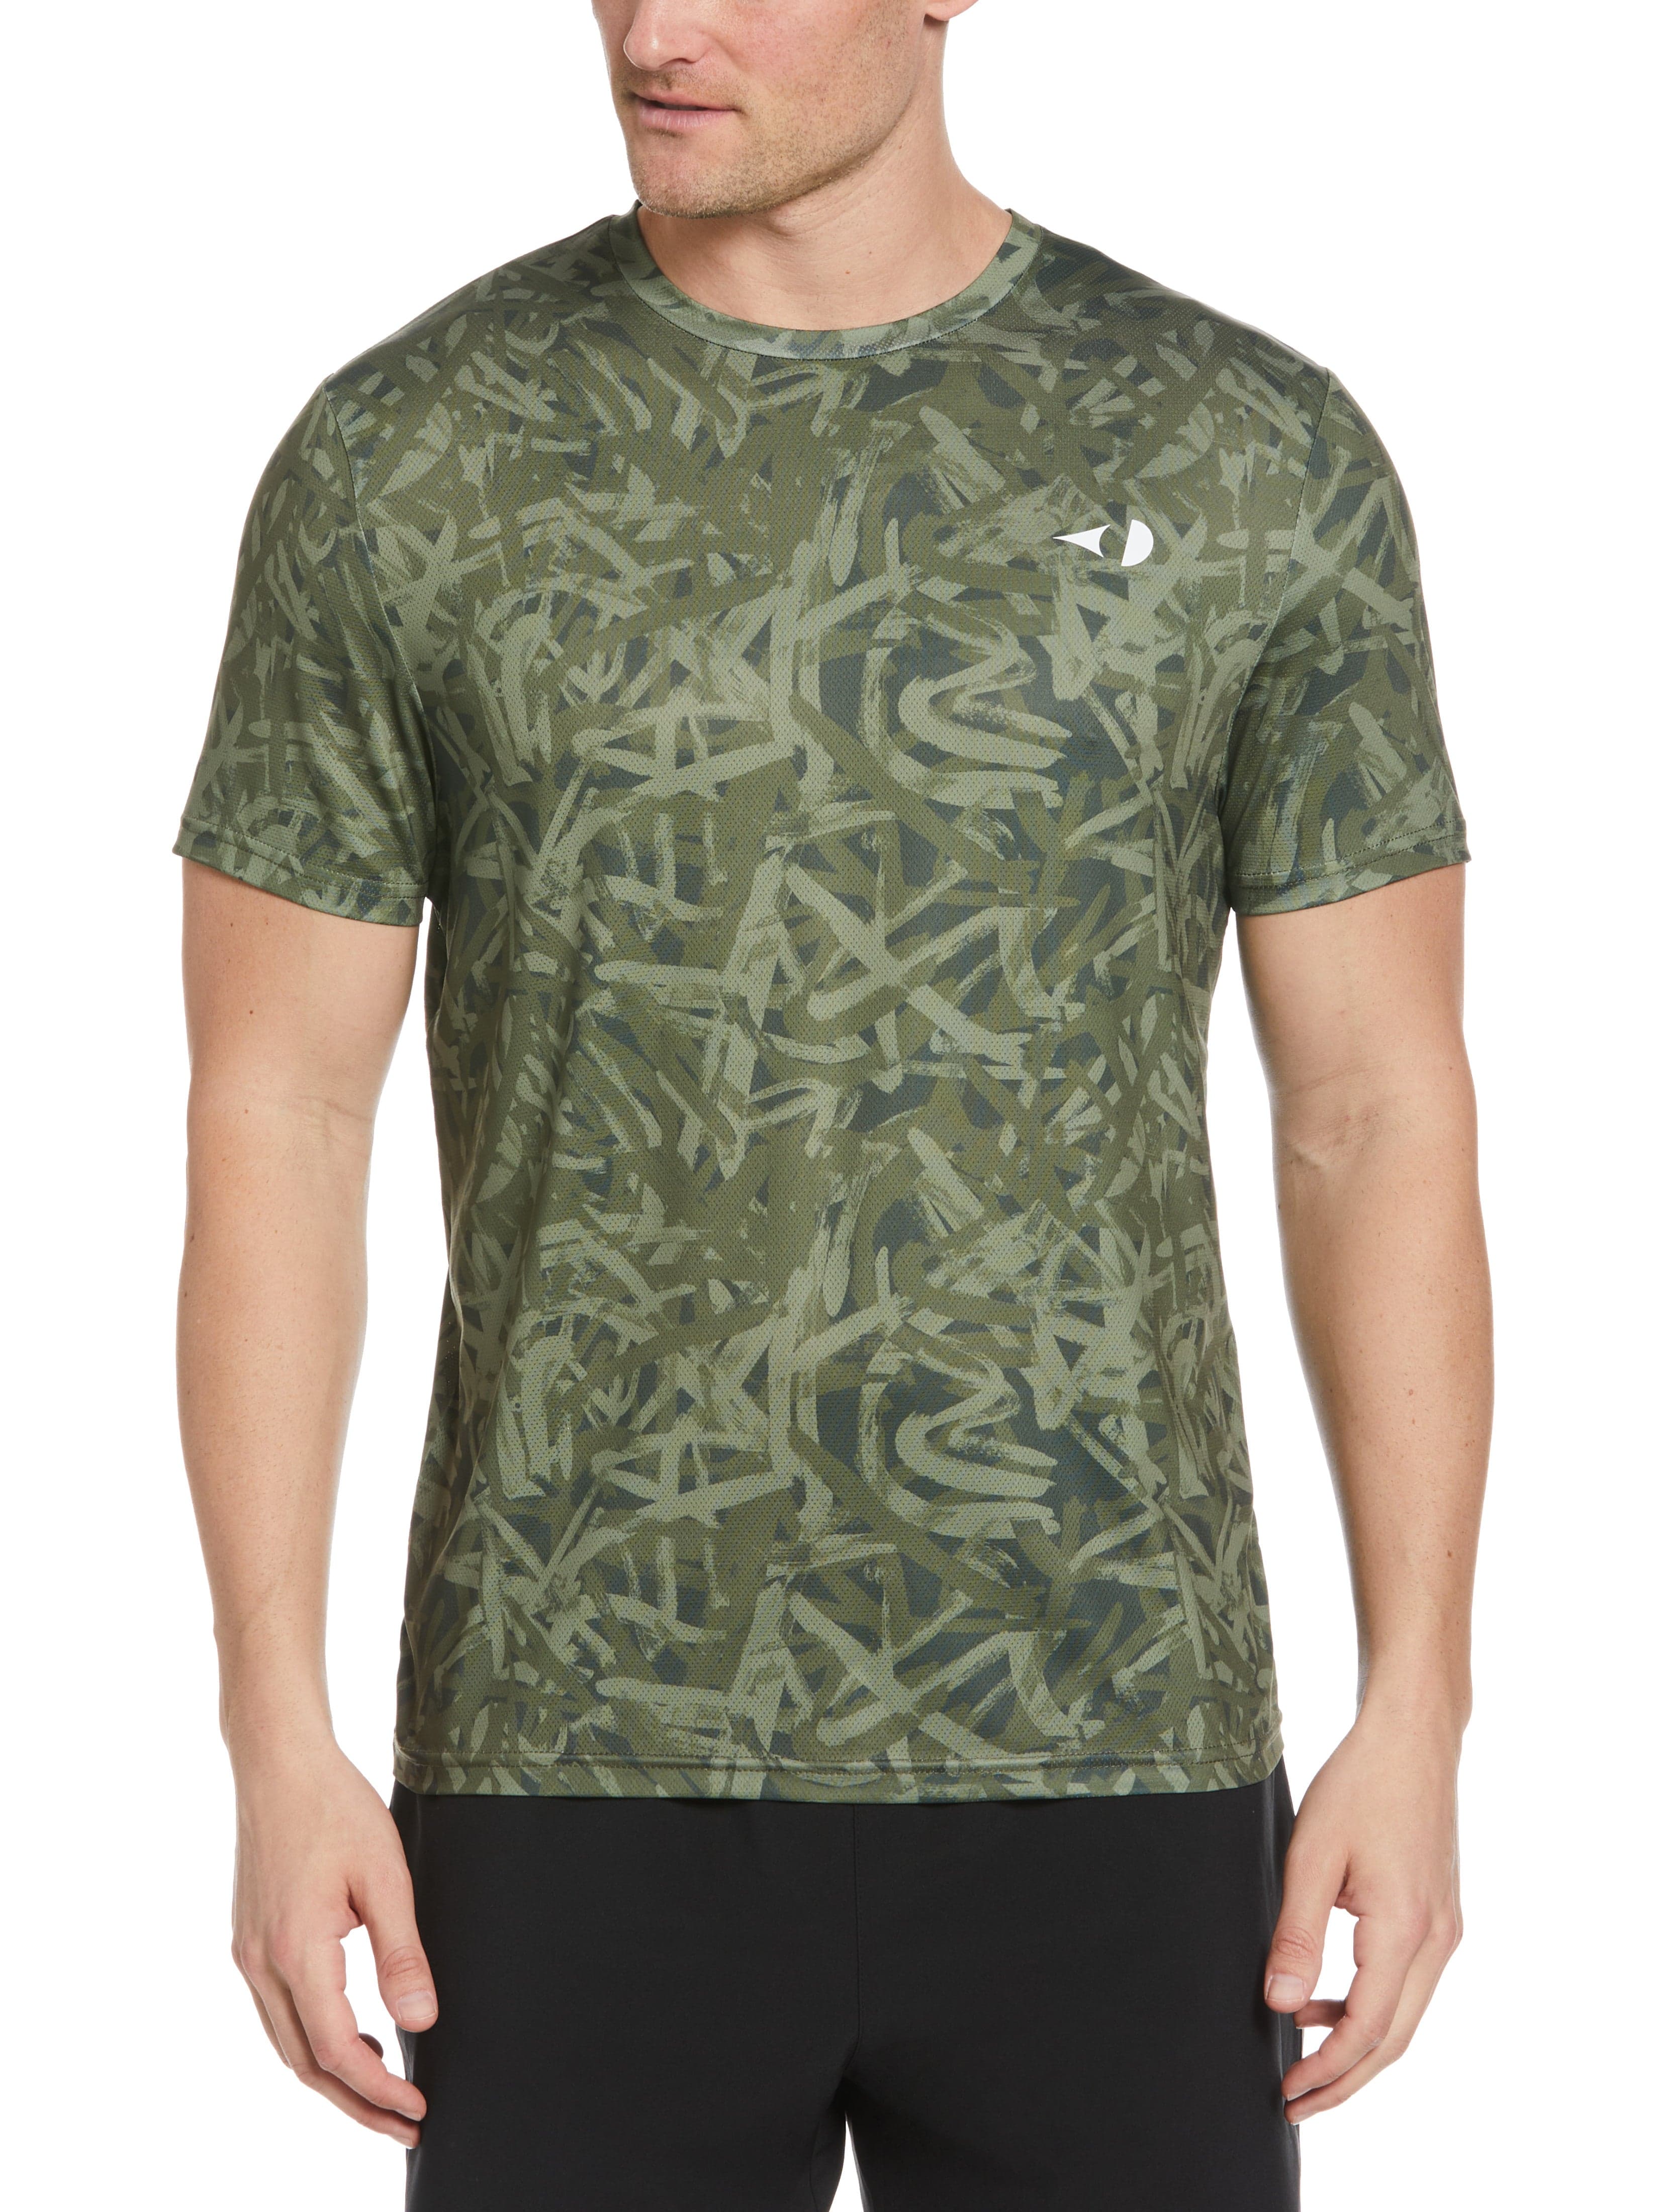 Grand Slam Mens Graffiti Print Tennis T-Shirt, Size Large, Olivine Green, Polyester/Spandex | Golf Apparel Shop